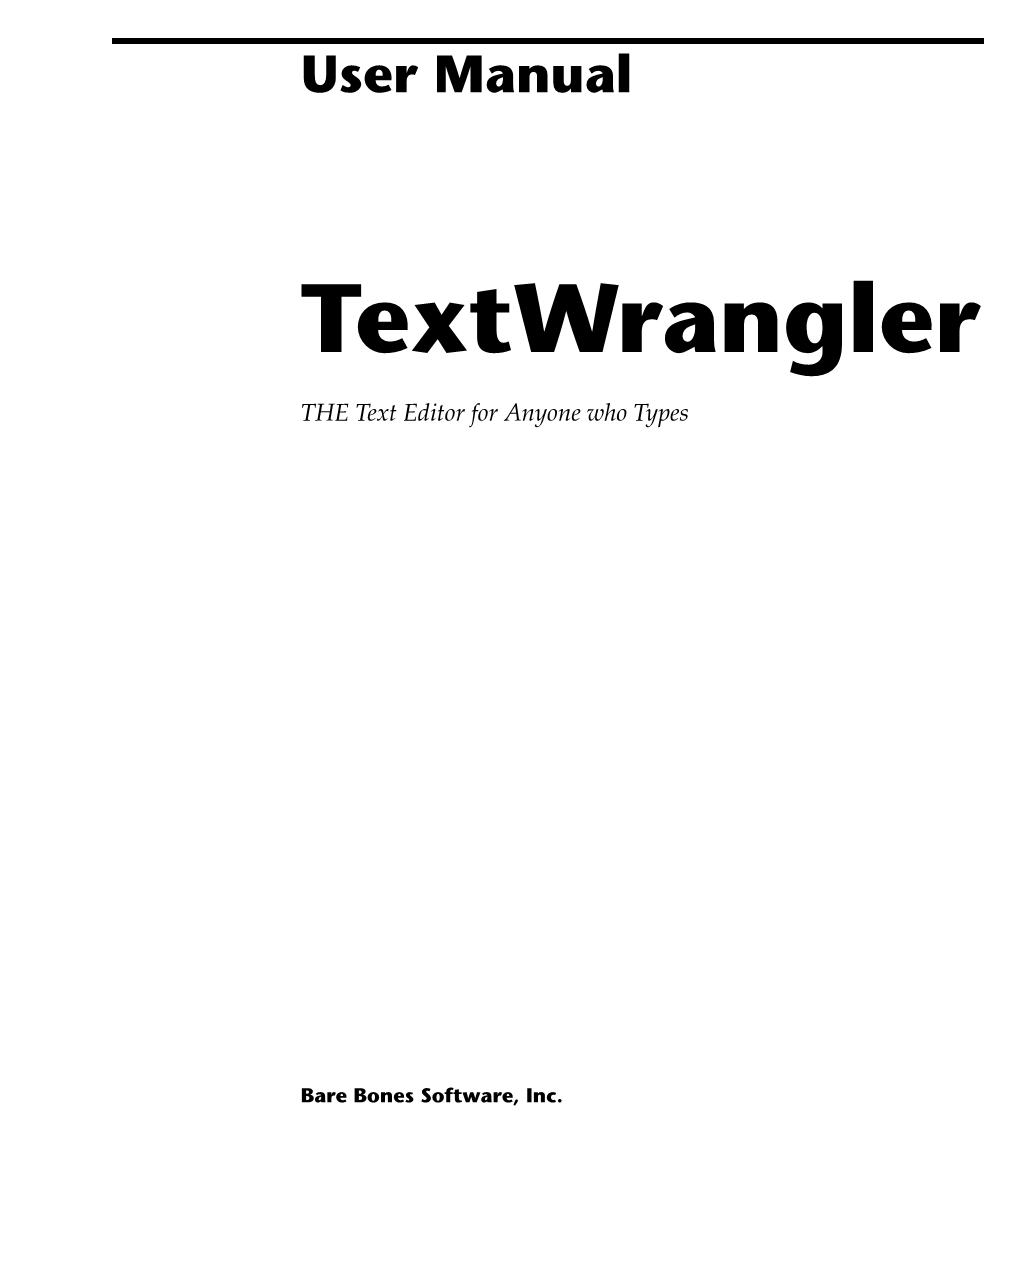 Textwrangler 2.2 User Manual